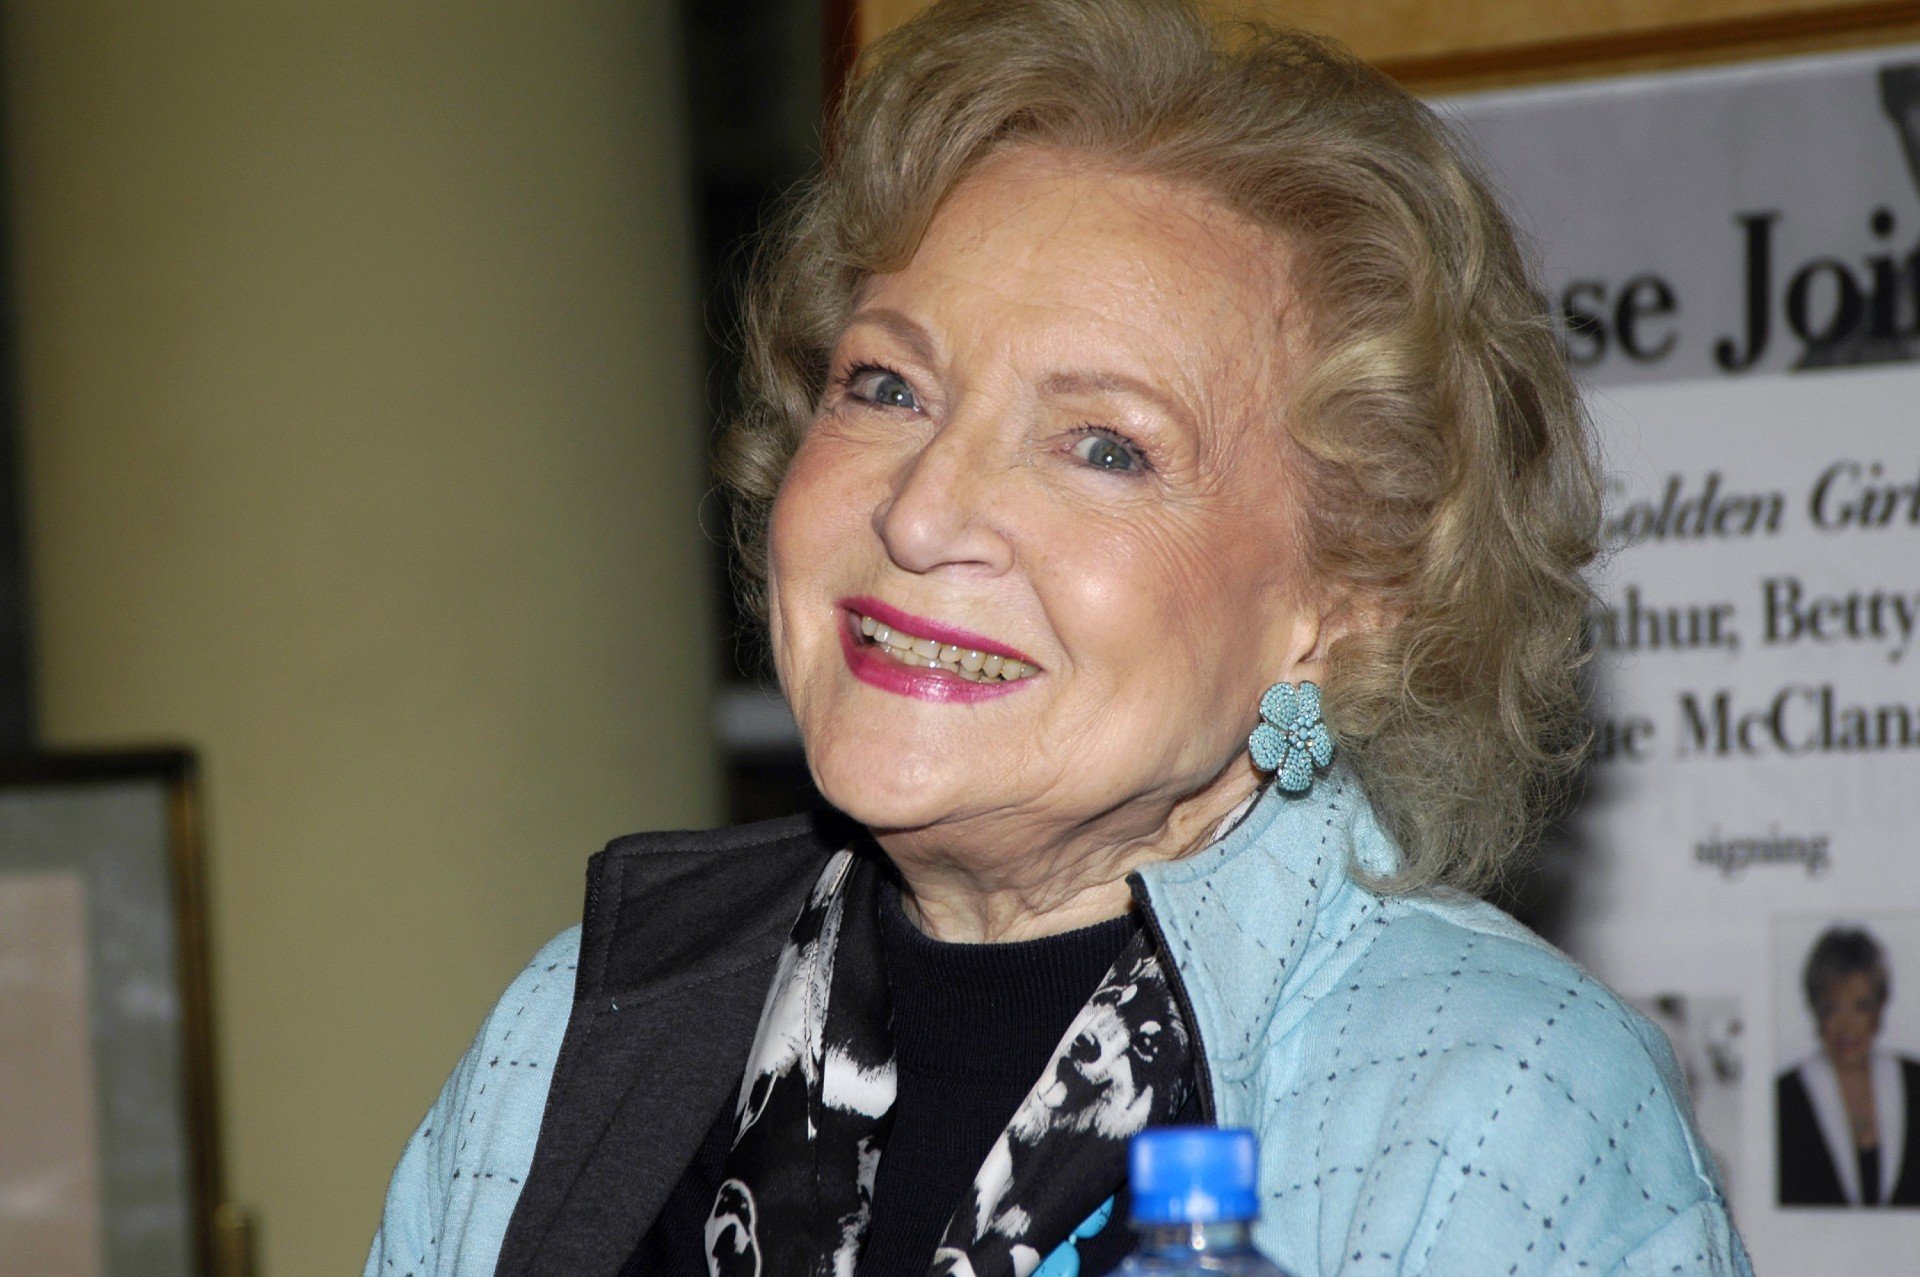 Betty White smiles while wearing a powder blue jacket